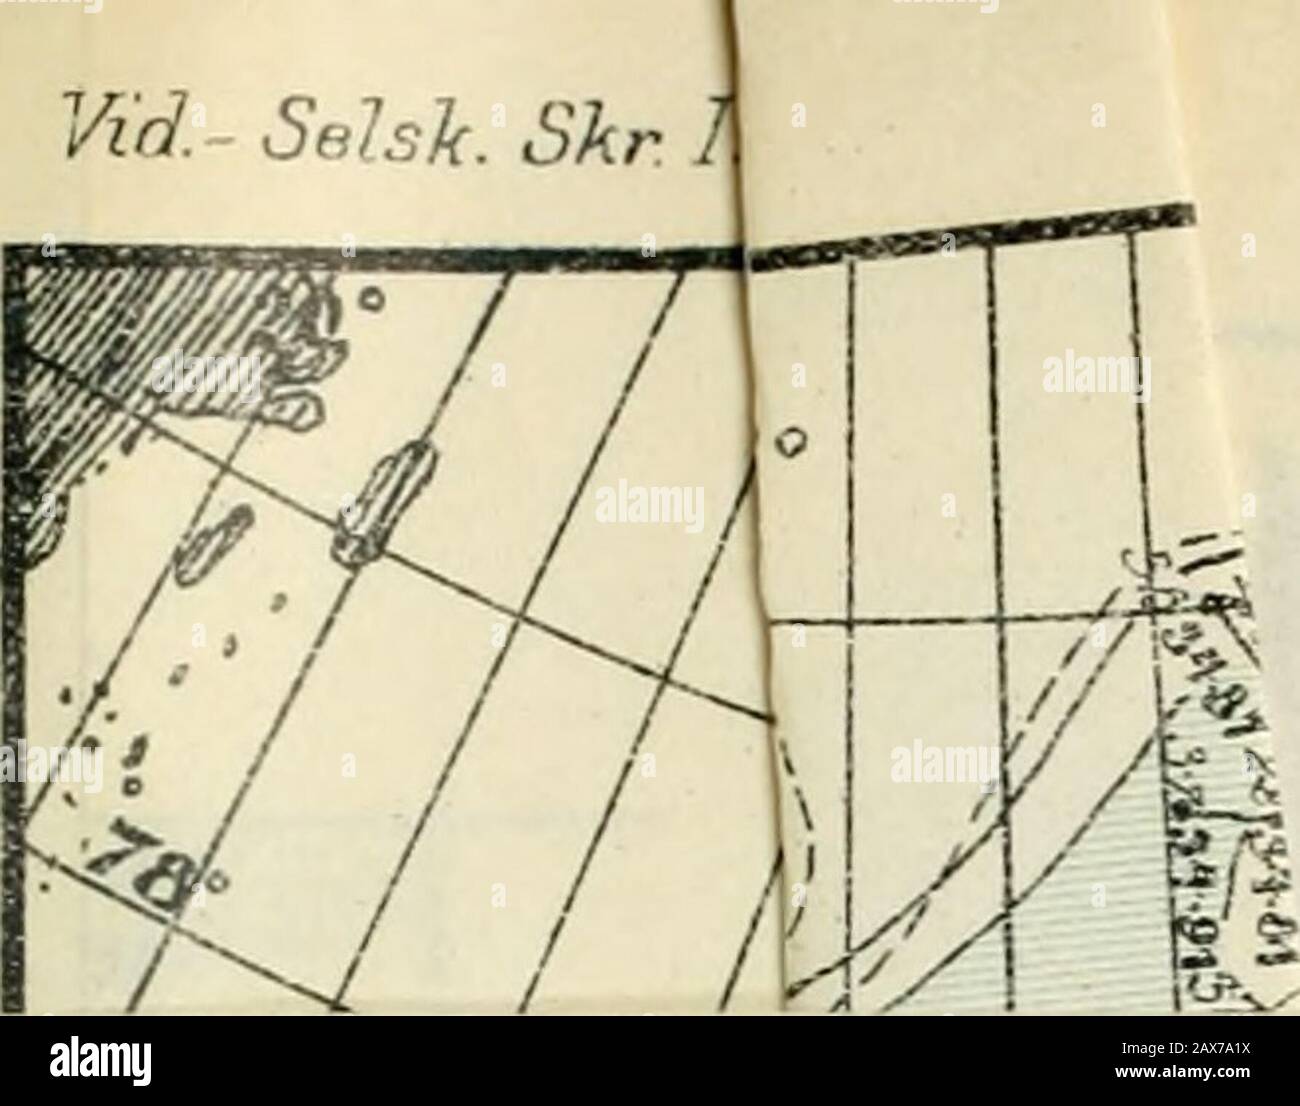 La mer à l'ouest de Spitsbergen; les observations océanographiques de l'expédition de Spitsbergen d'Isachsen en 1910 . 34.88 = 7-34 9 — - 28 - 38 7.22 34-88 27.32 10 — 20 51 7.66 34 01 27.28 1 — 1 17 : 75 27.30 1912. N° 12. LA MER OUEST DE SPITSBERGEN. 89 Date de la station et HOURI. T. Latitude Longitude /» C. septembre 1910 8 N 1 p. M. 2 — 3 - 4 — 5 — 6 - 7 - 8 - 9 10 — 11 p. M.M 9 1 a. po. 2 — 3 - 4 - 5 — 6 - 7 - 8 - 9 -10 — 1 p. m. 3 - 4 - 73 772 59 - 5 - 43 - 36 - 28 4 7 57 5° - 42 - 35 - 27 - &gt;910 i7l 18 19 7° 5° • 49 • 42 36 - 39 • 23 - 16Fuglo à Tromsa B 20 30 4 O. I I I I 21314° 49 58 7 726 3 Banque D'Images